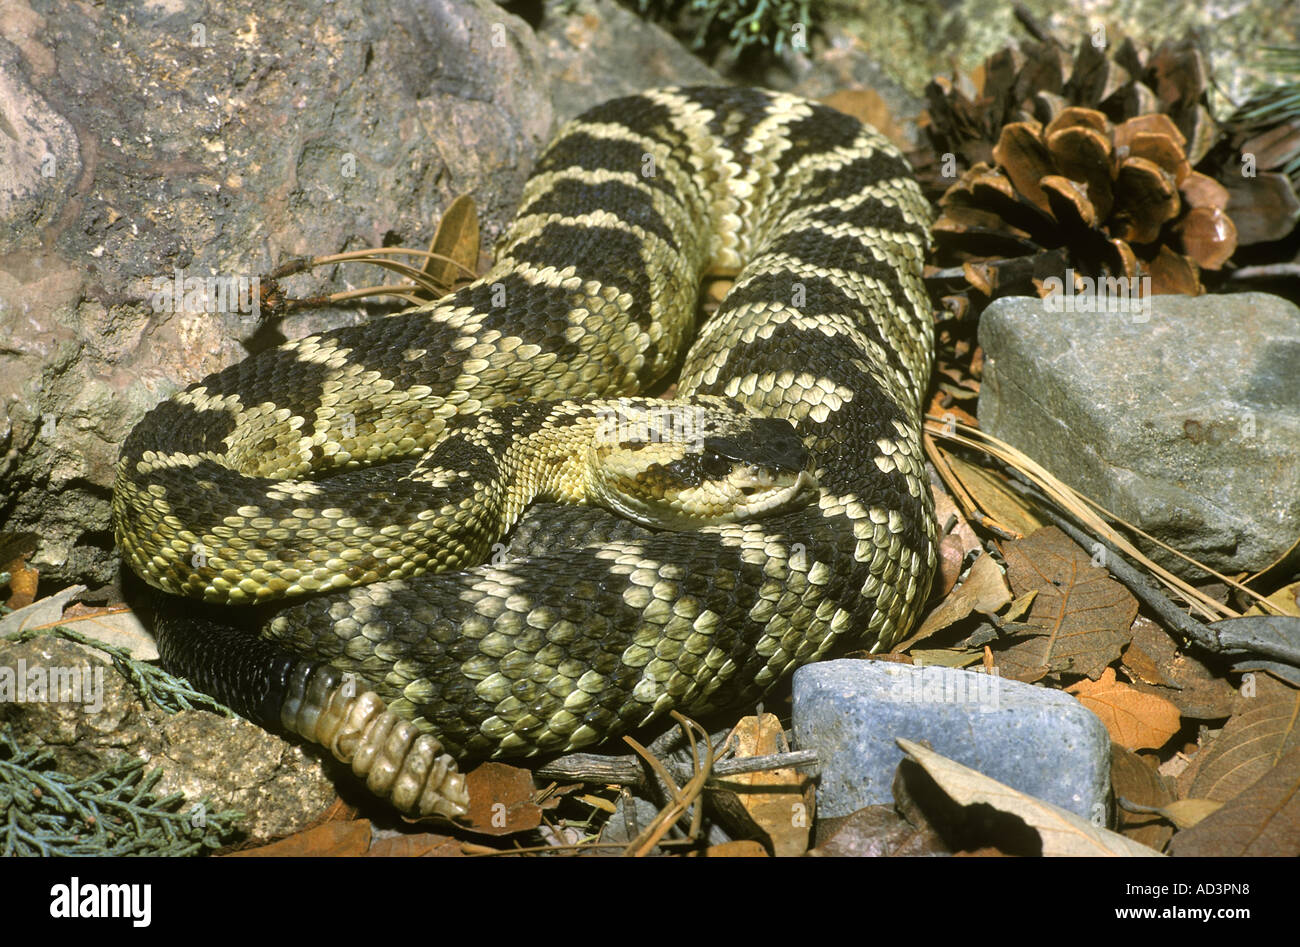 Northern Black Tailed Rattlesnake Crotalus molossus Arizona Stock Photo